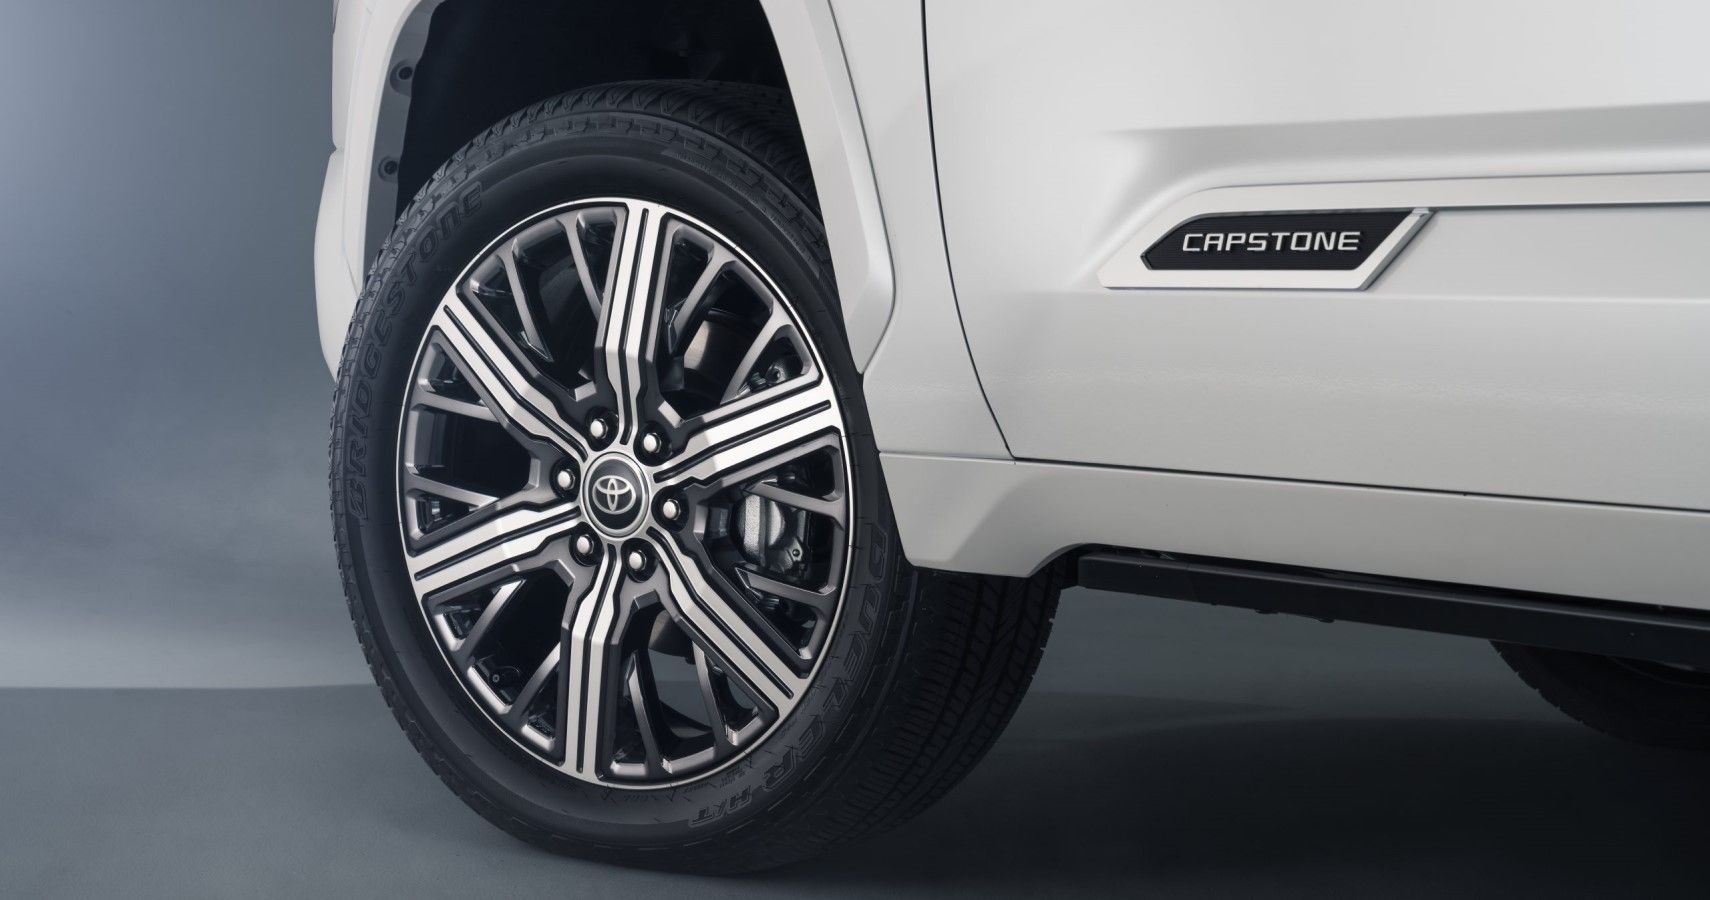 2022 Toyota Tundra Capstone chrome 22-inch wheels close-up view